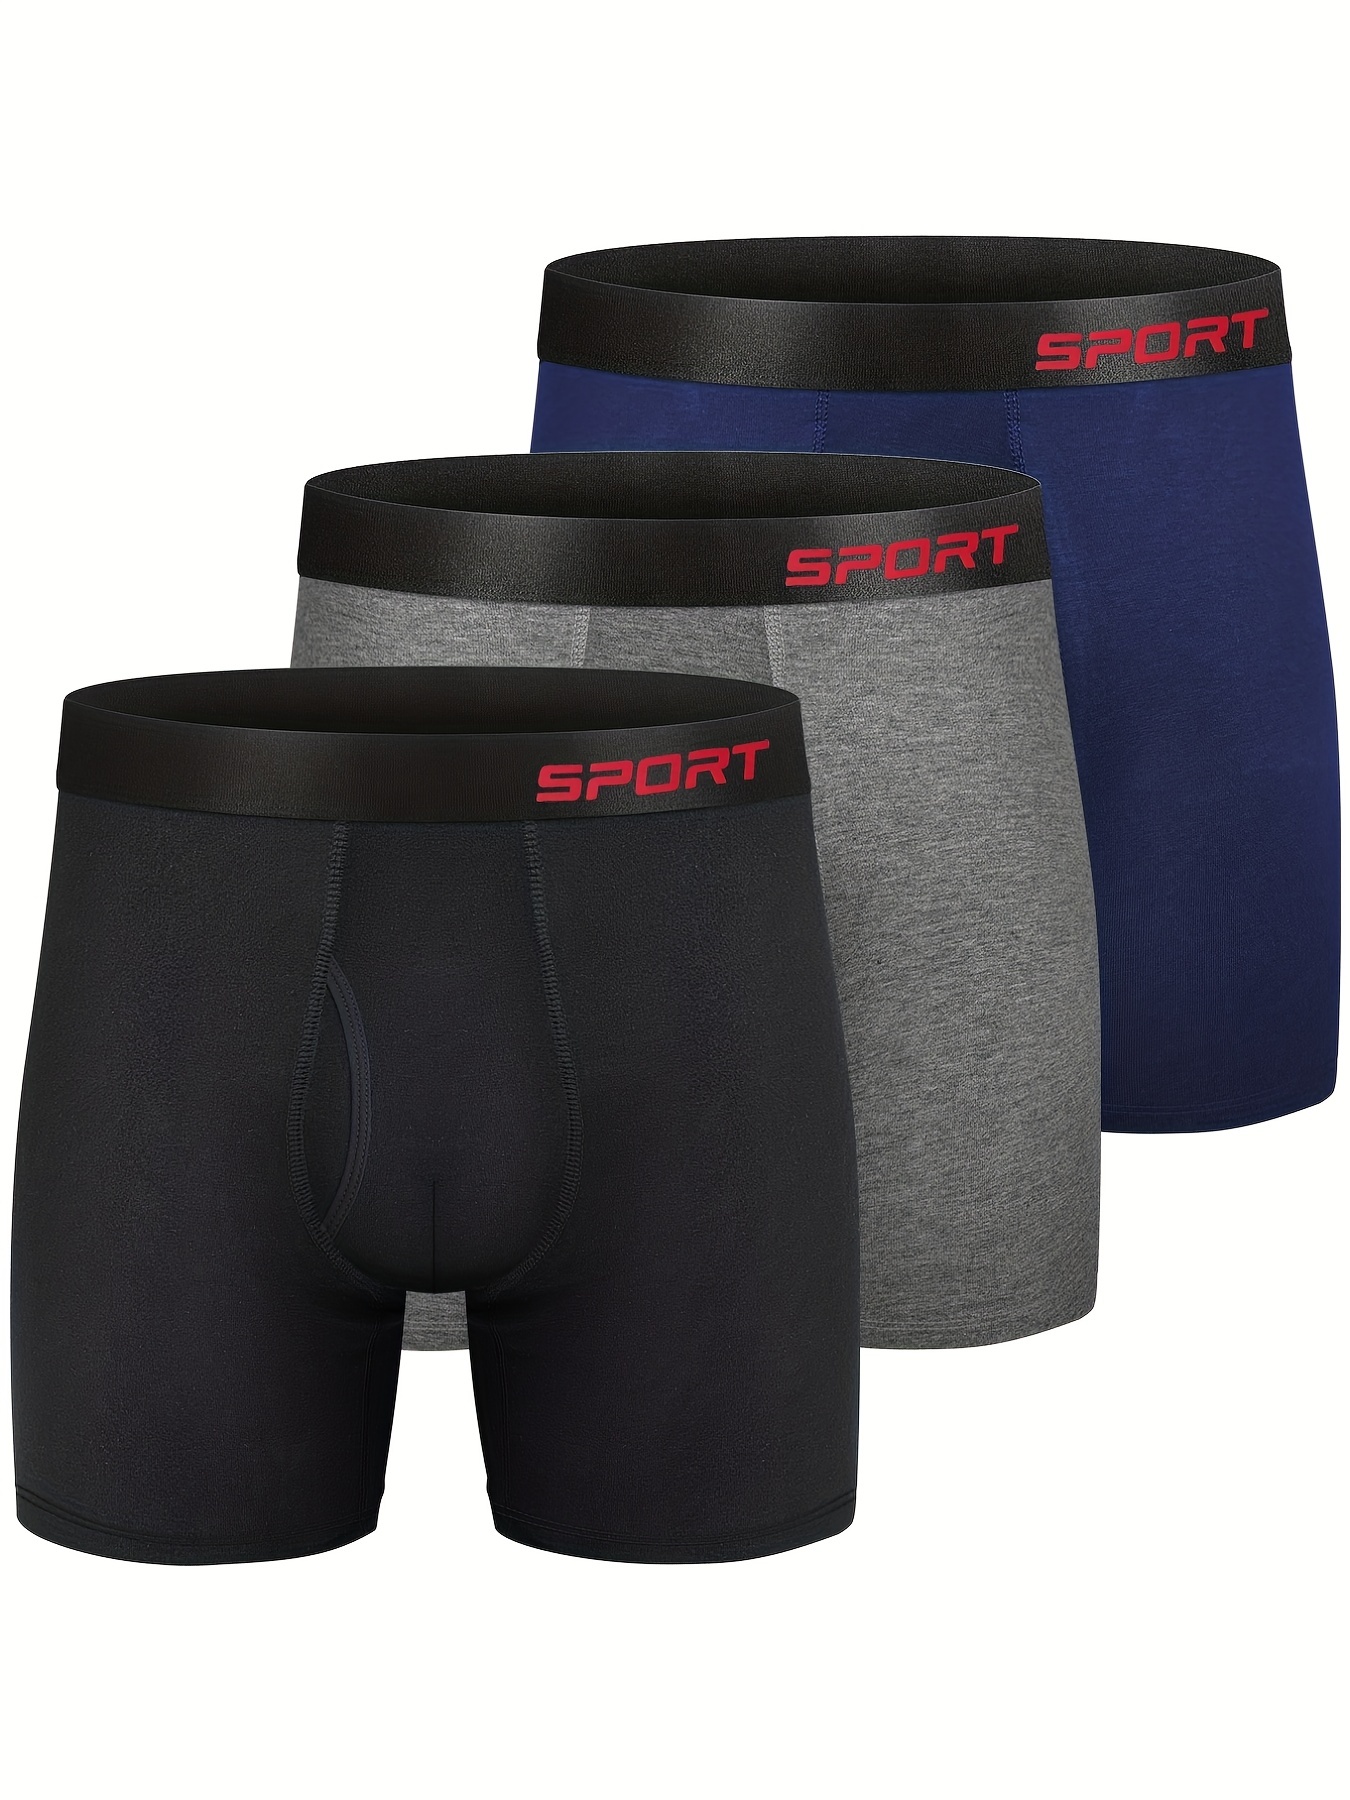 Spyder Mens Boxer Briefs 4 Pack Poly Spandex Performance Underwear/Comfort  Pouch